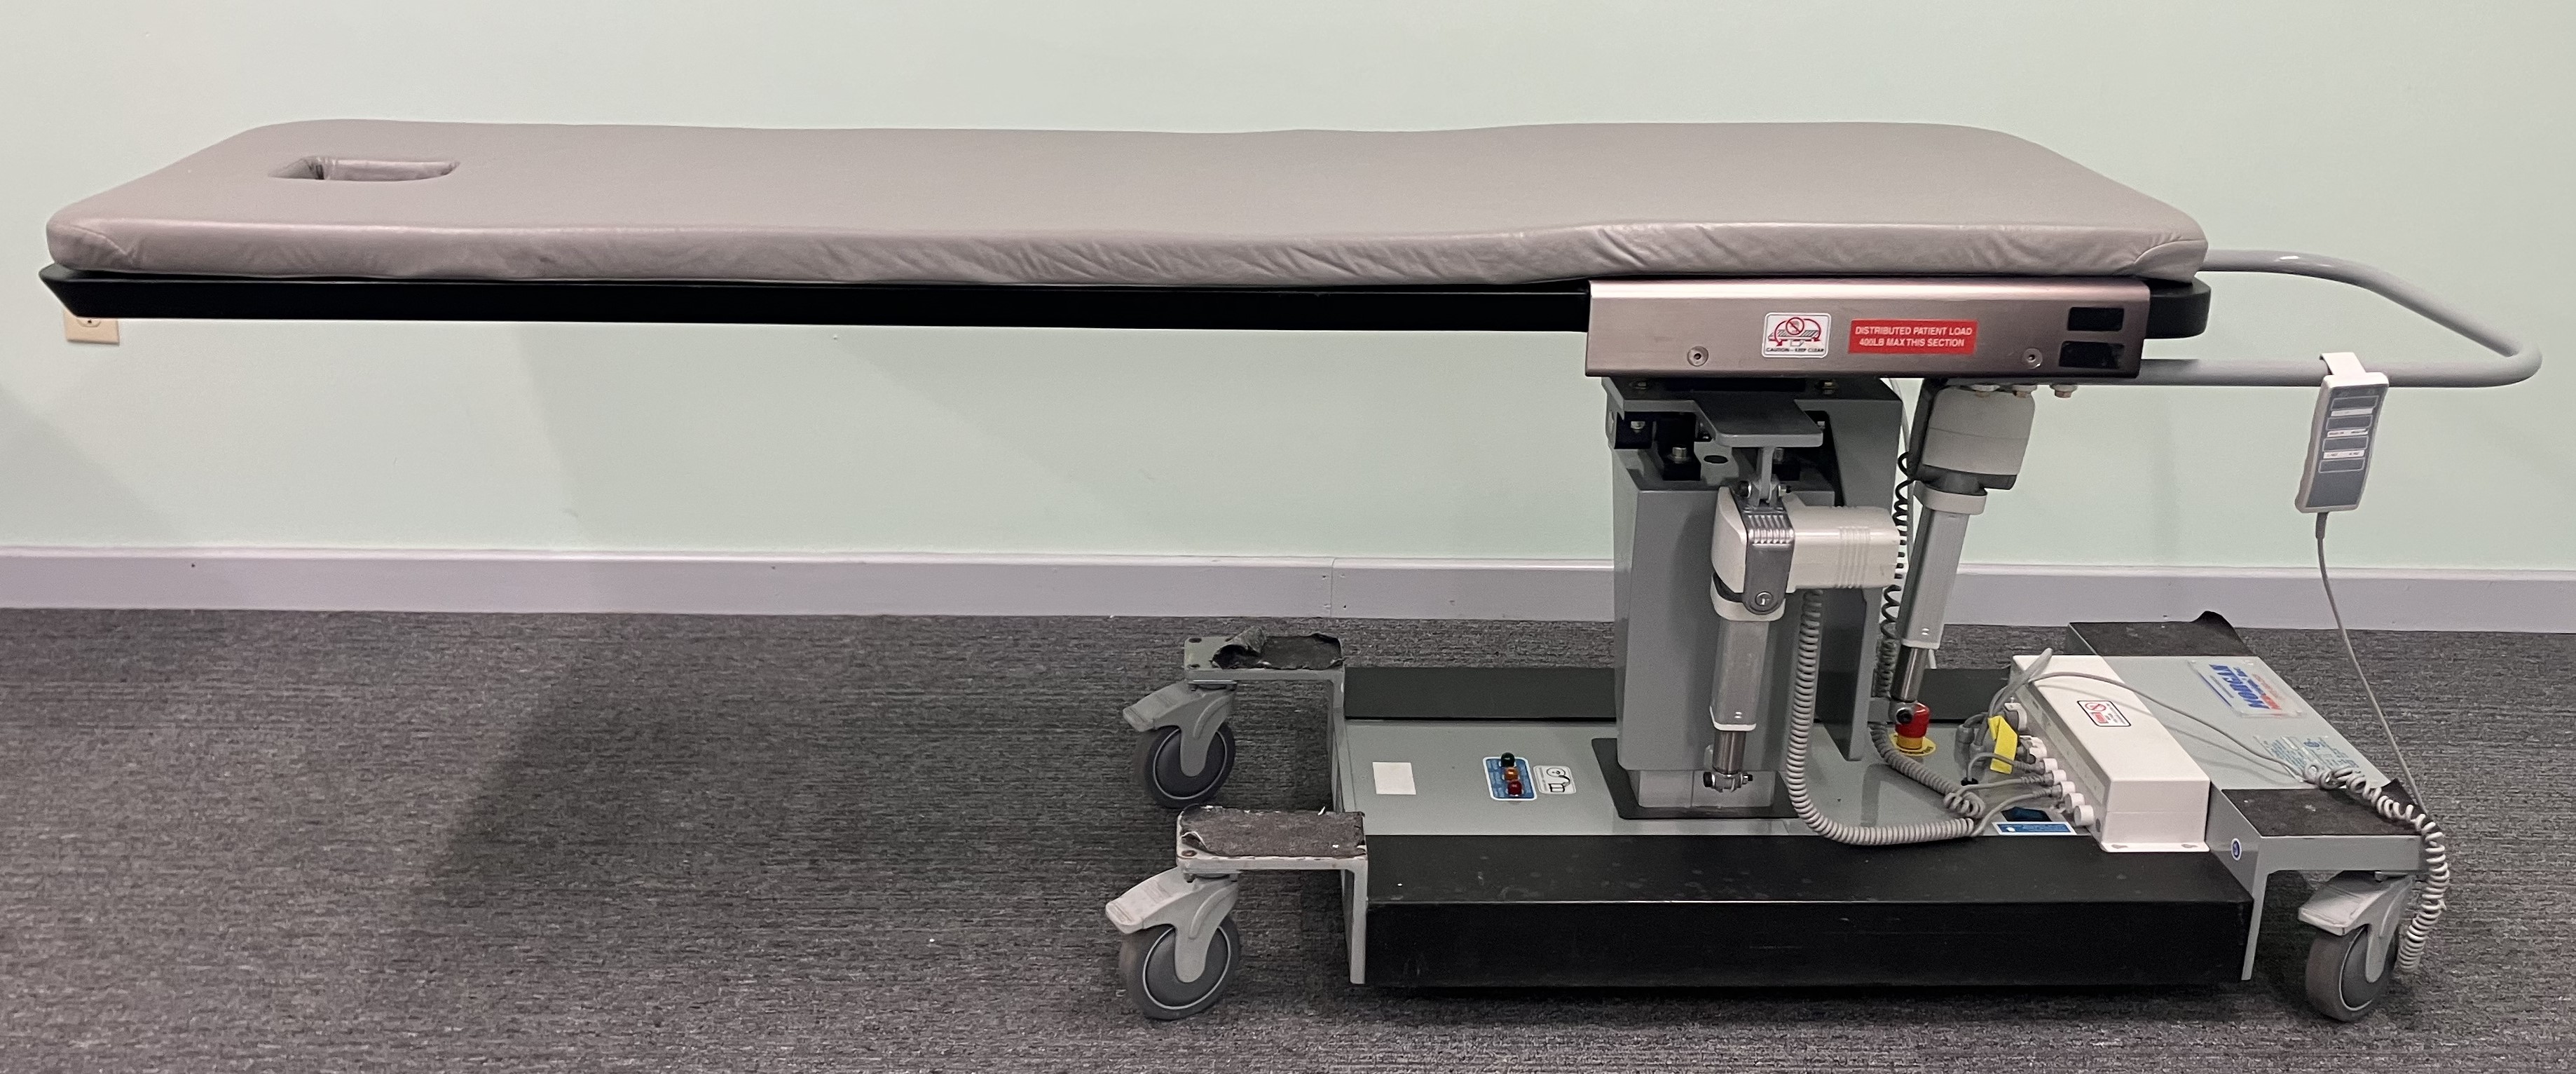 Morgan MEDesign, Inc. Model Number: Basic 1 C-Arm Imaging Table